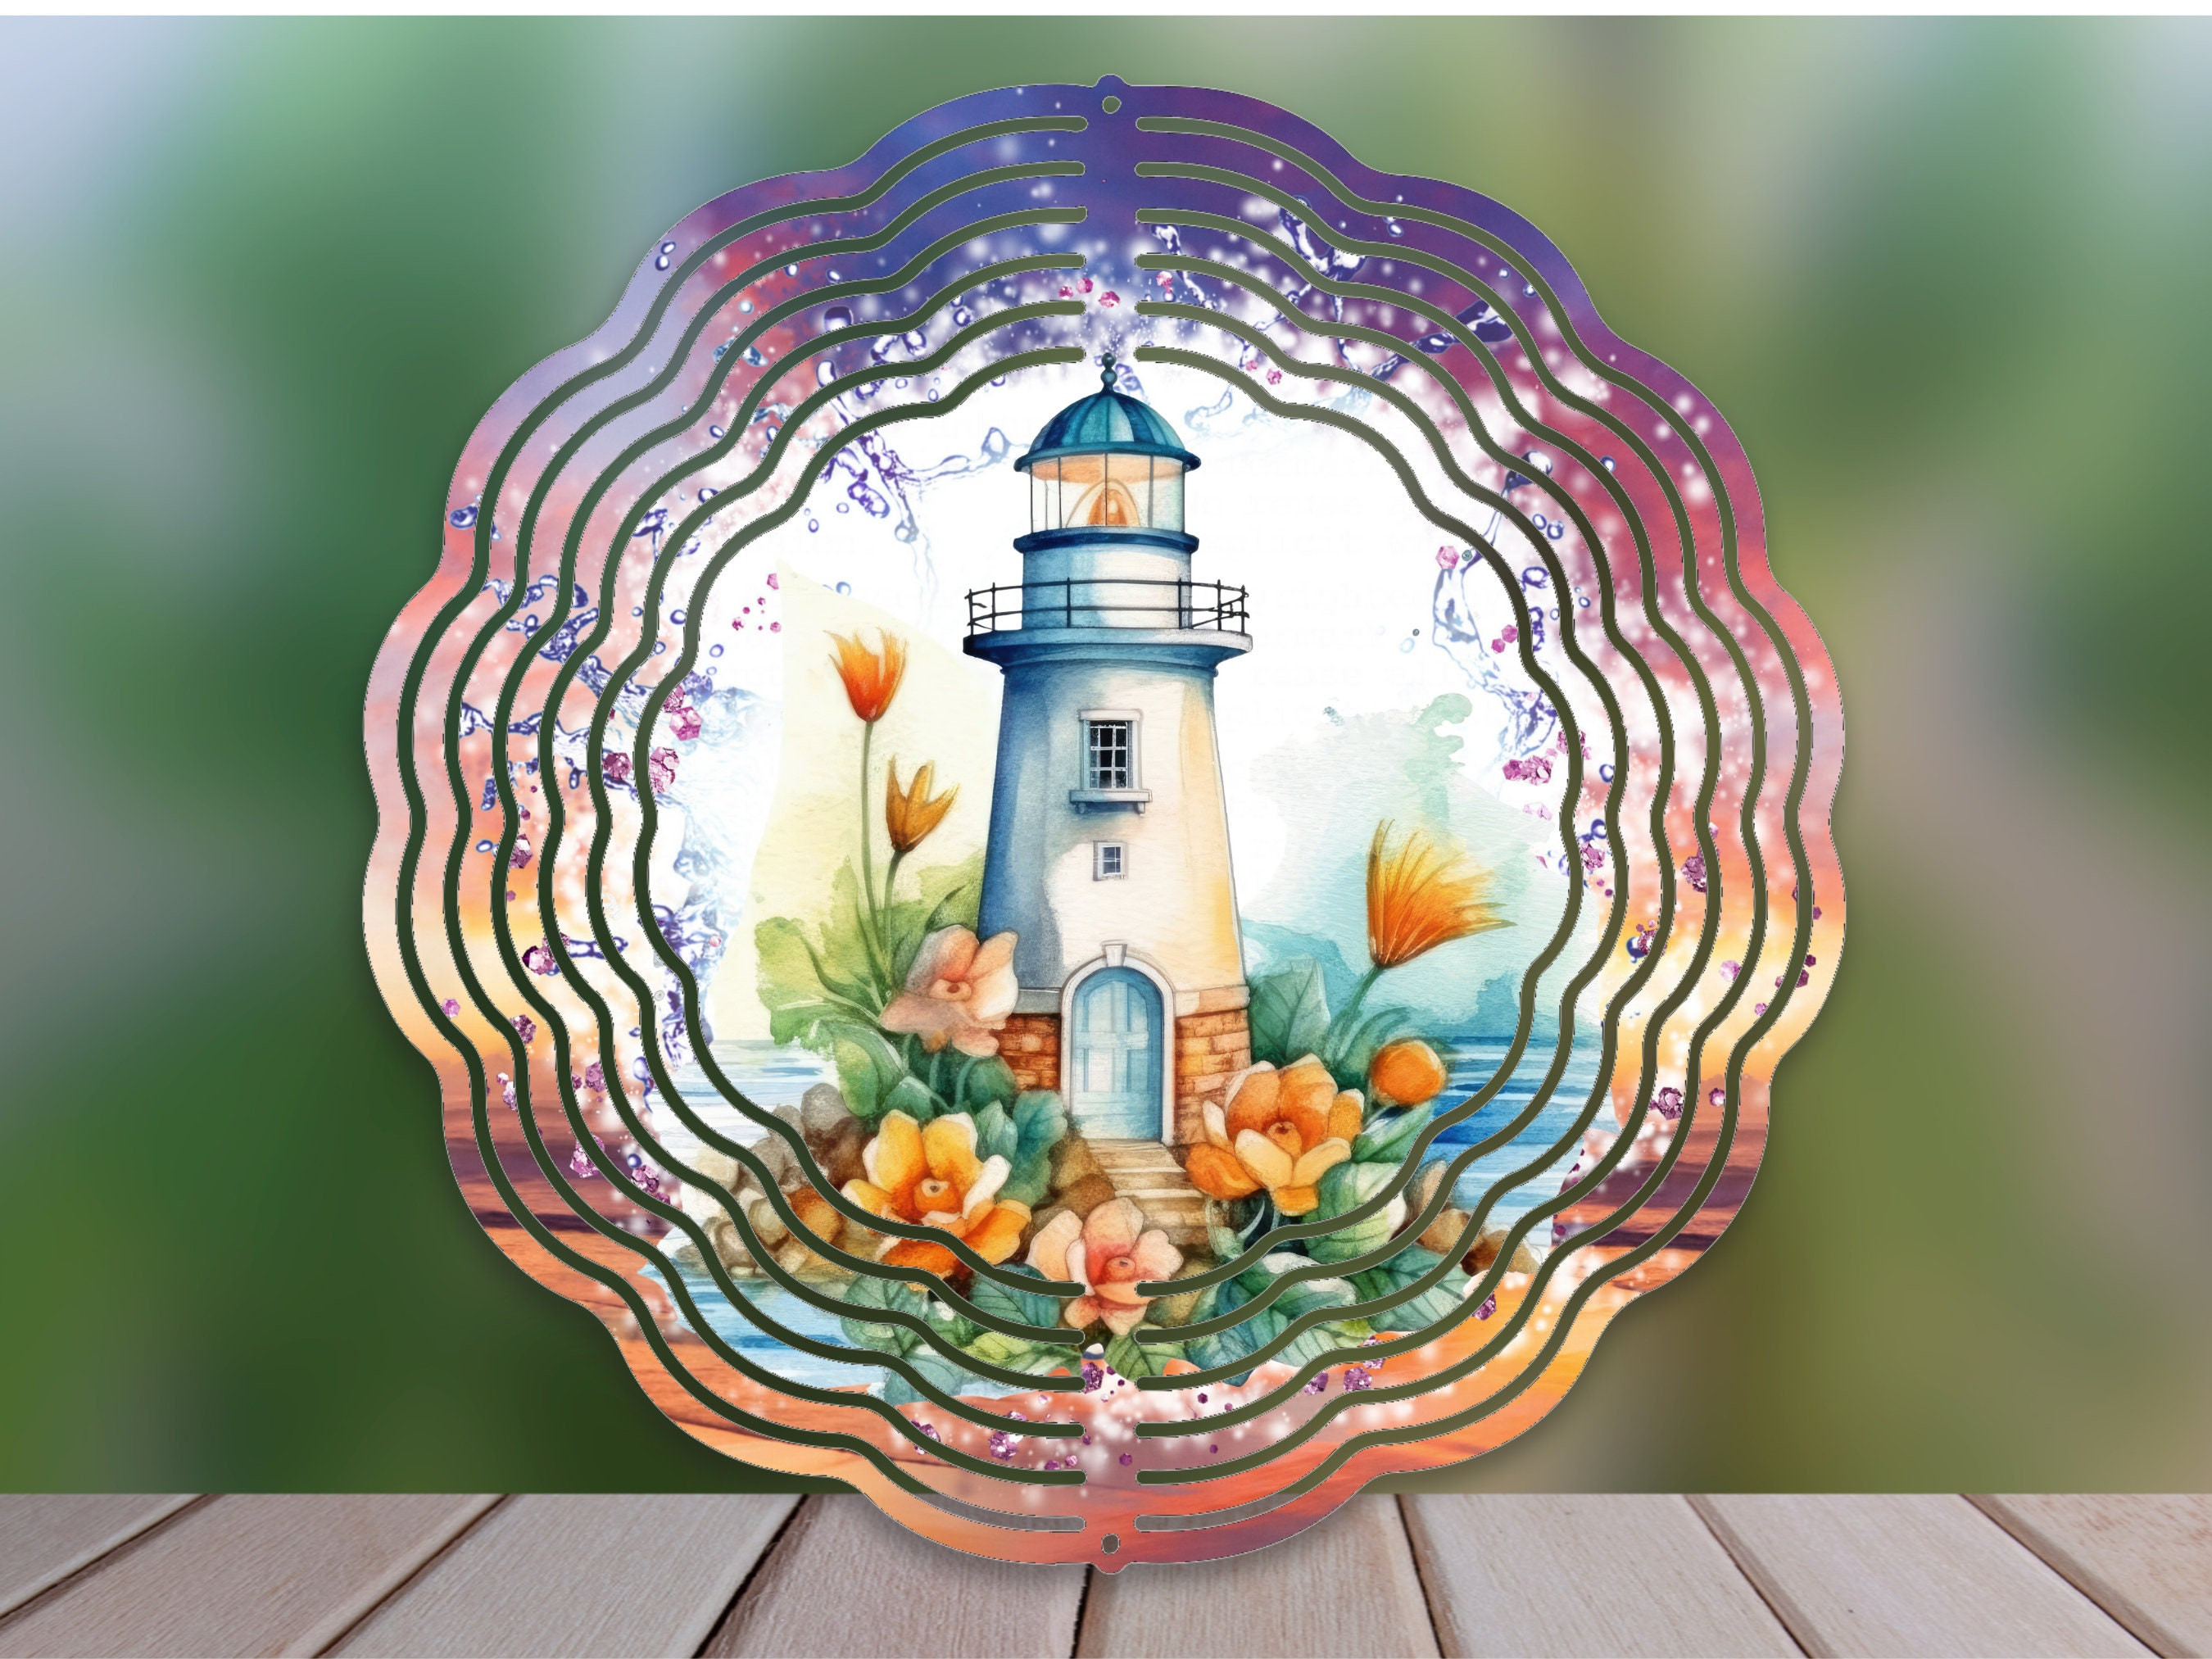 Lighthouse Wind Spinner For Yard And Garden, Outdoor Garden Yard Decoration, Garden Decor, Chime Art Gift